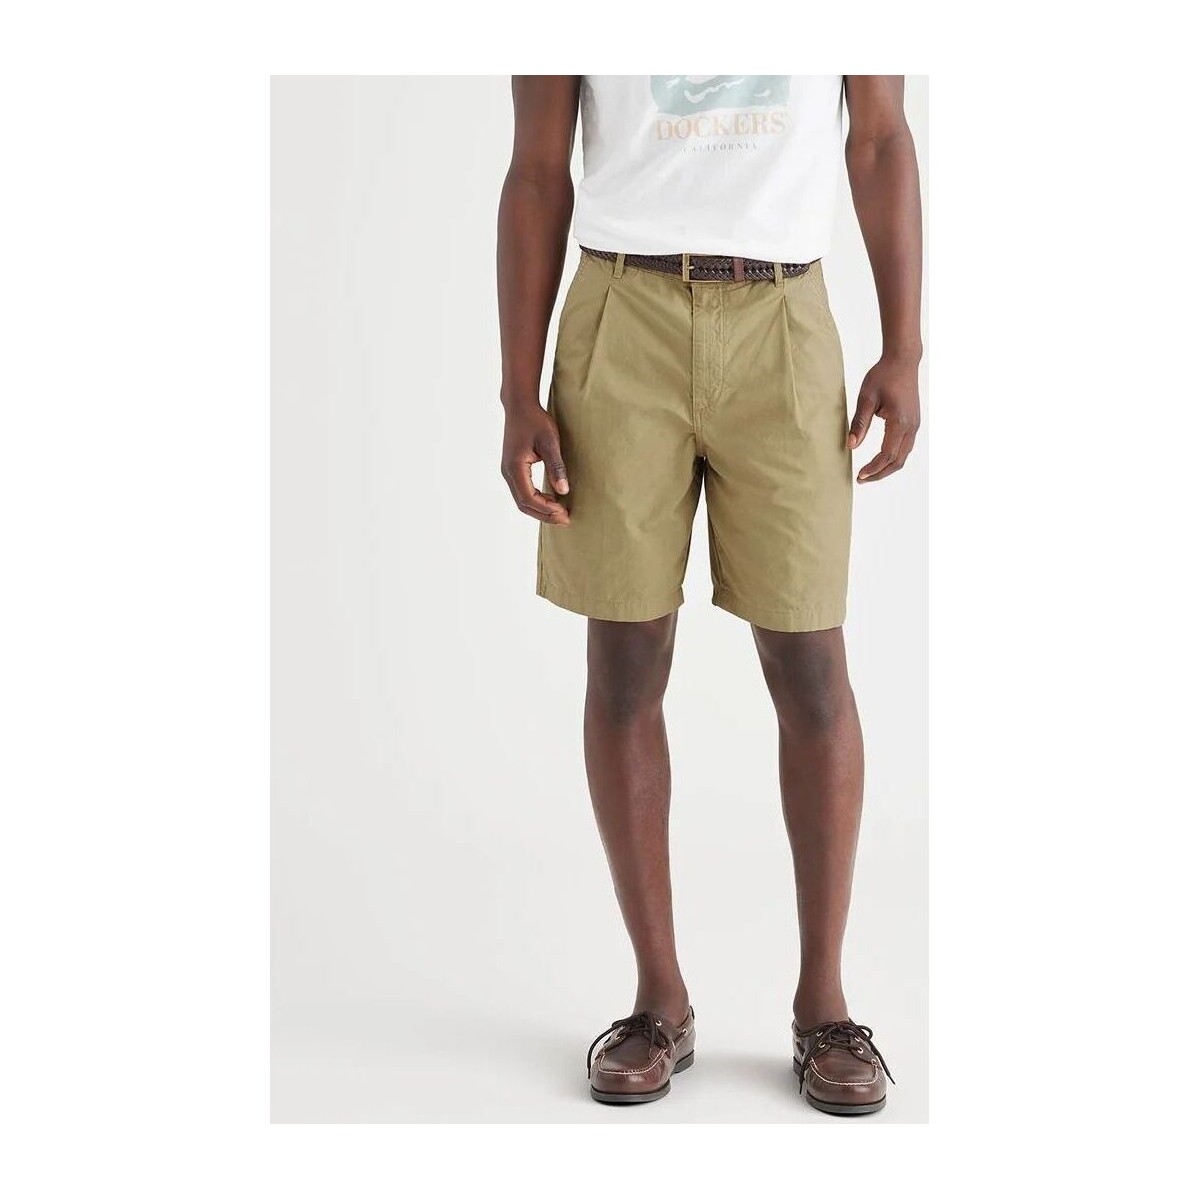 Textil Homem tryck Shorts / Bermudas Dockers A7546 0001 OROGINAL PLEATED-0000 HARVEST GOLD Bege